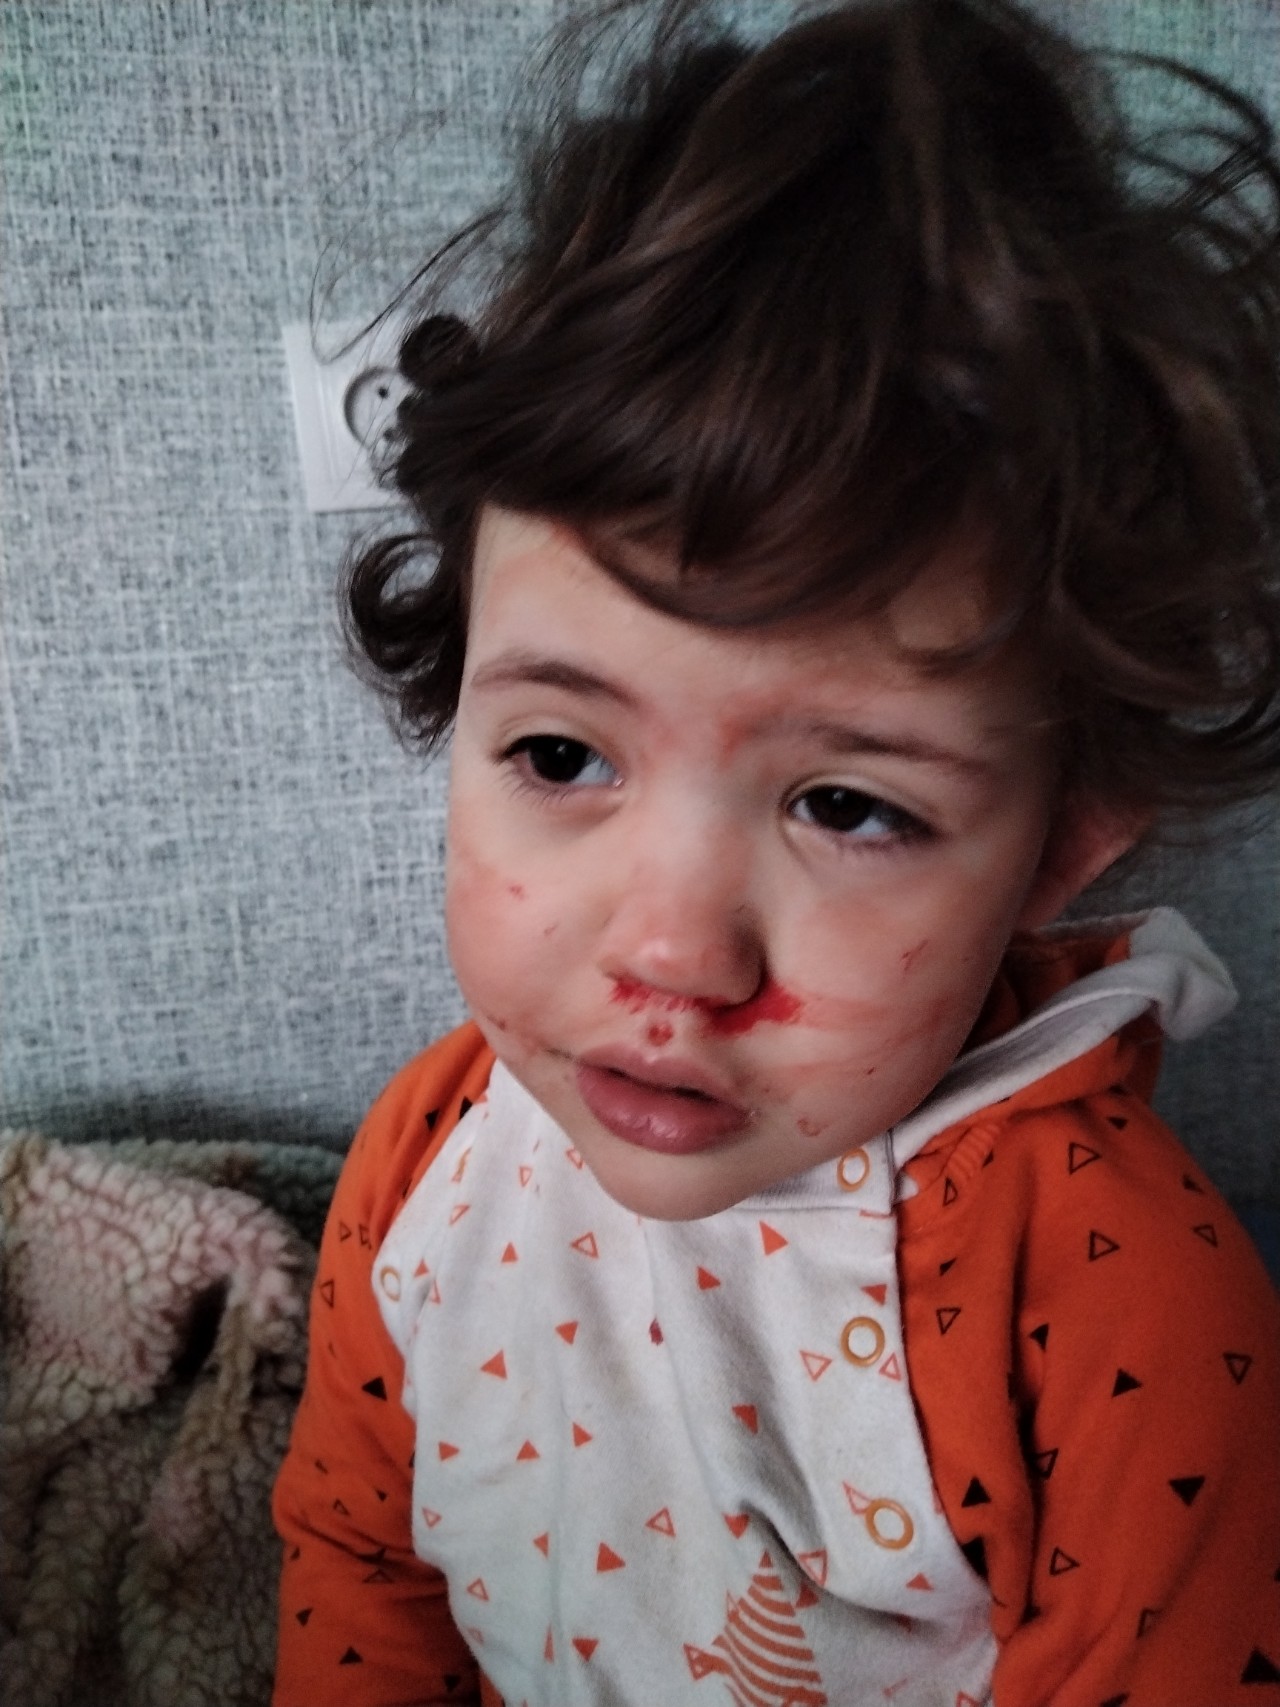 Кровь из носа у ребенка фото